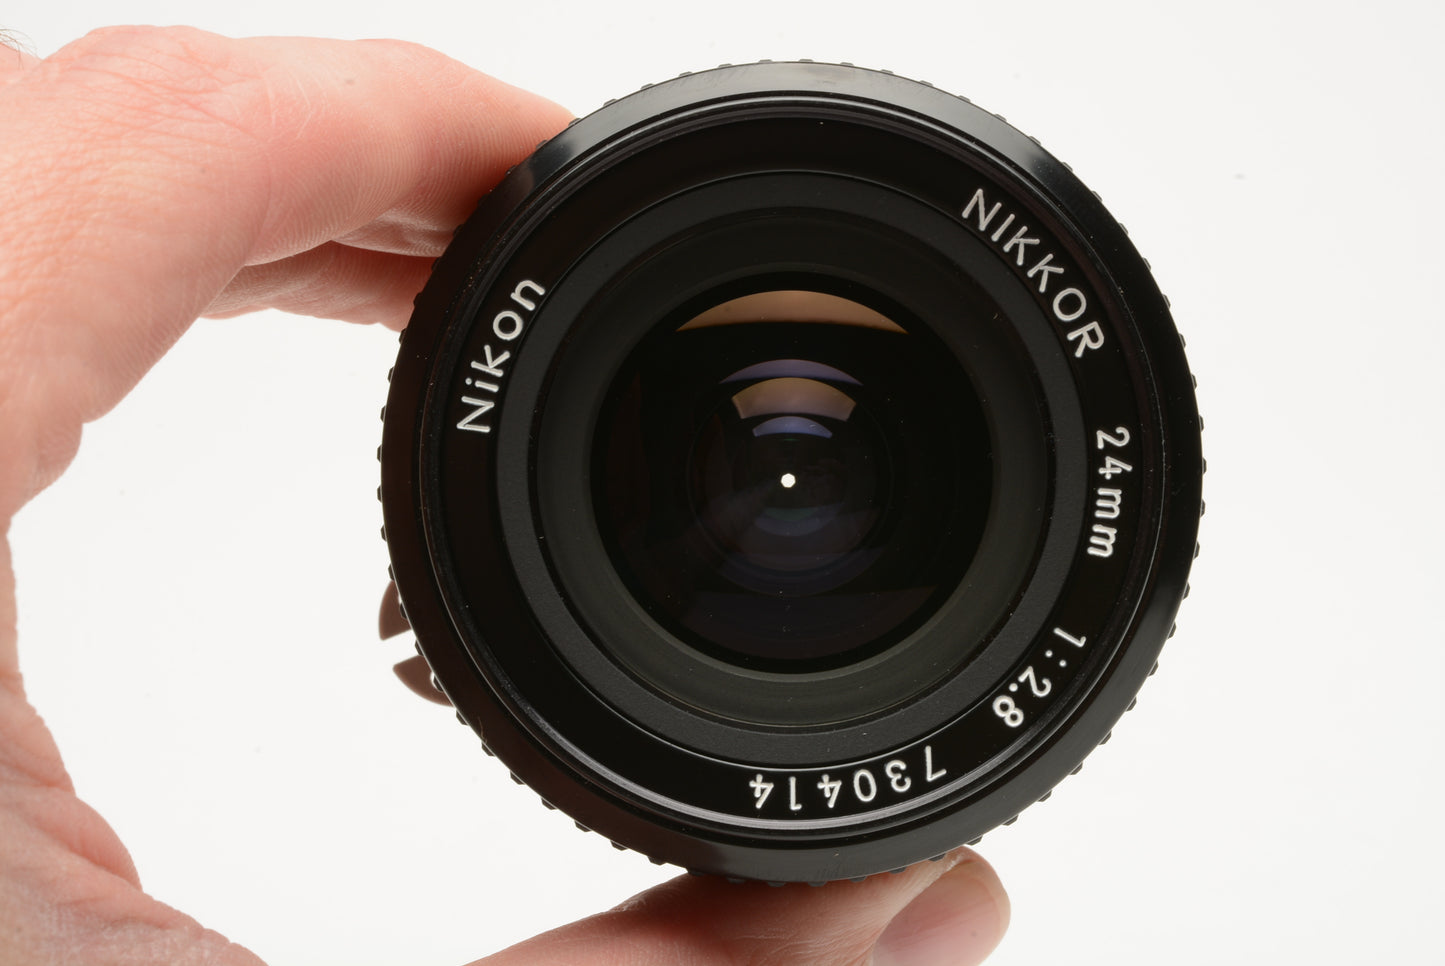 Nikon Nikkor 24mm f2.8 AI-s wide lens, Boxed, +L37 UV filter, Nice!